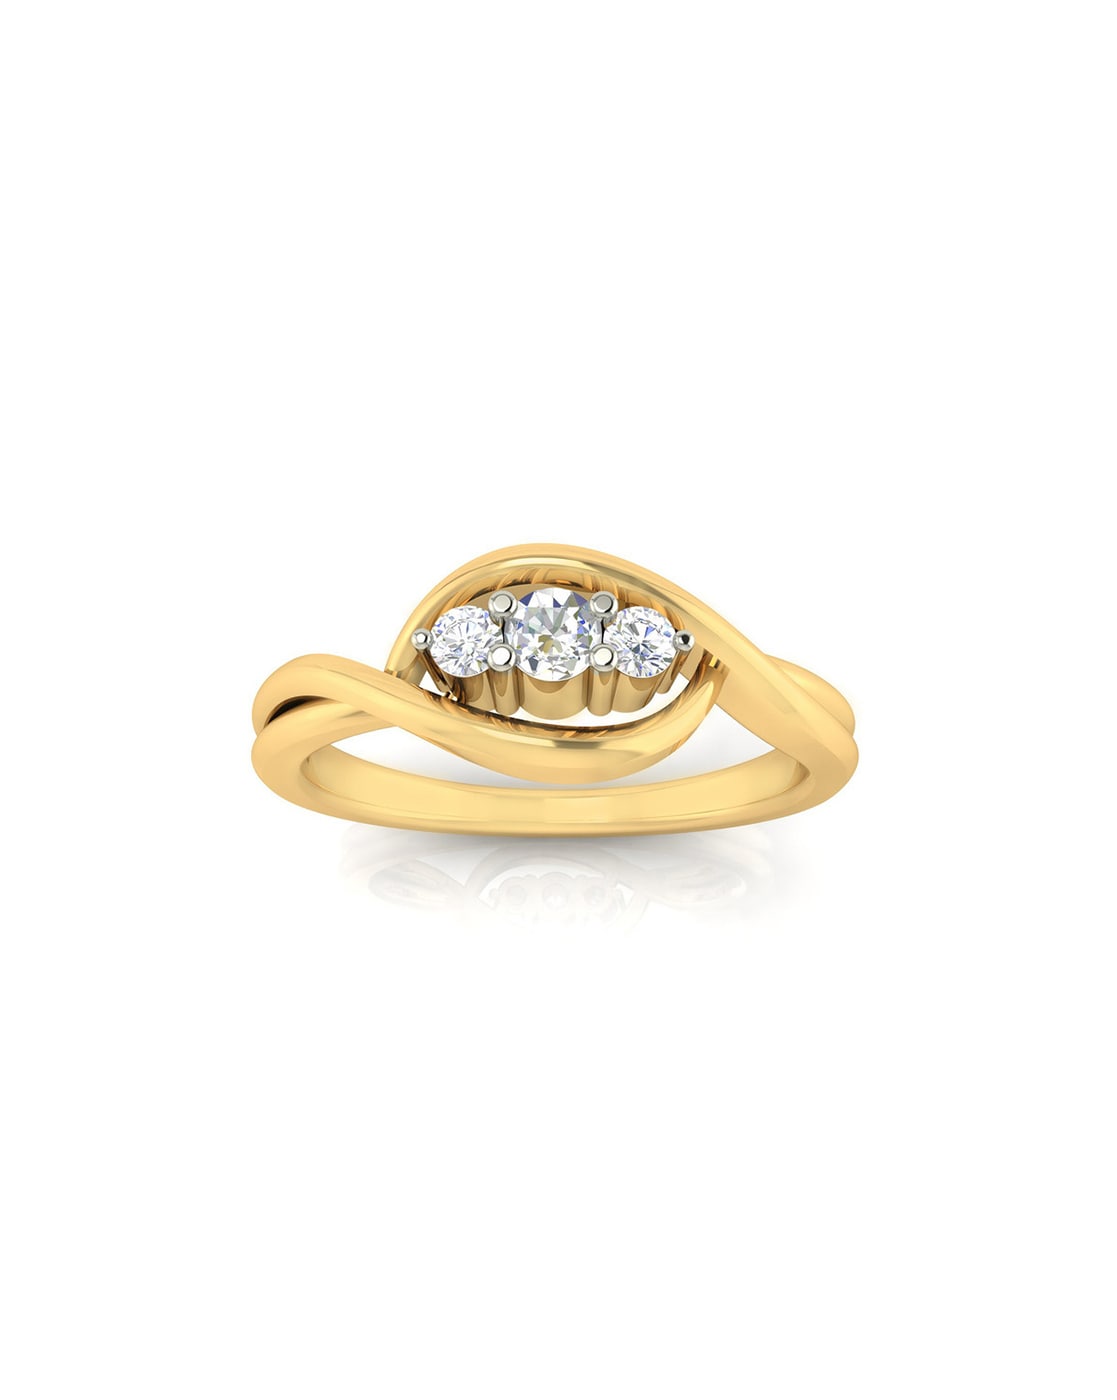 Showroom of 14k rose gold diamond larme twist ring | Jewelxy - 238826